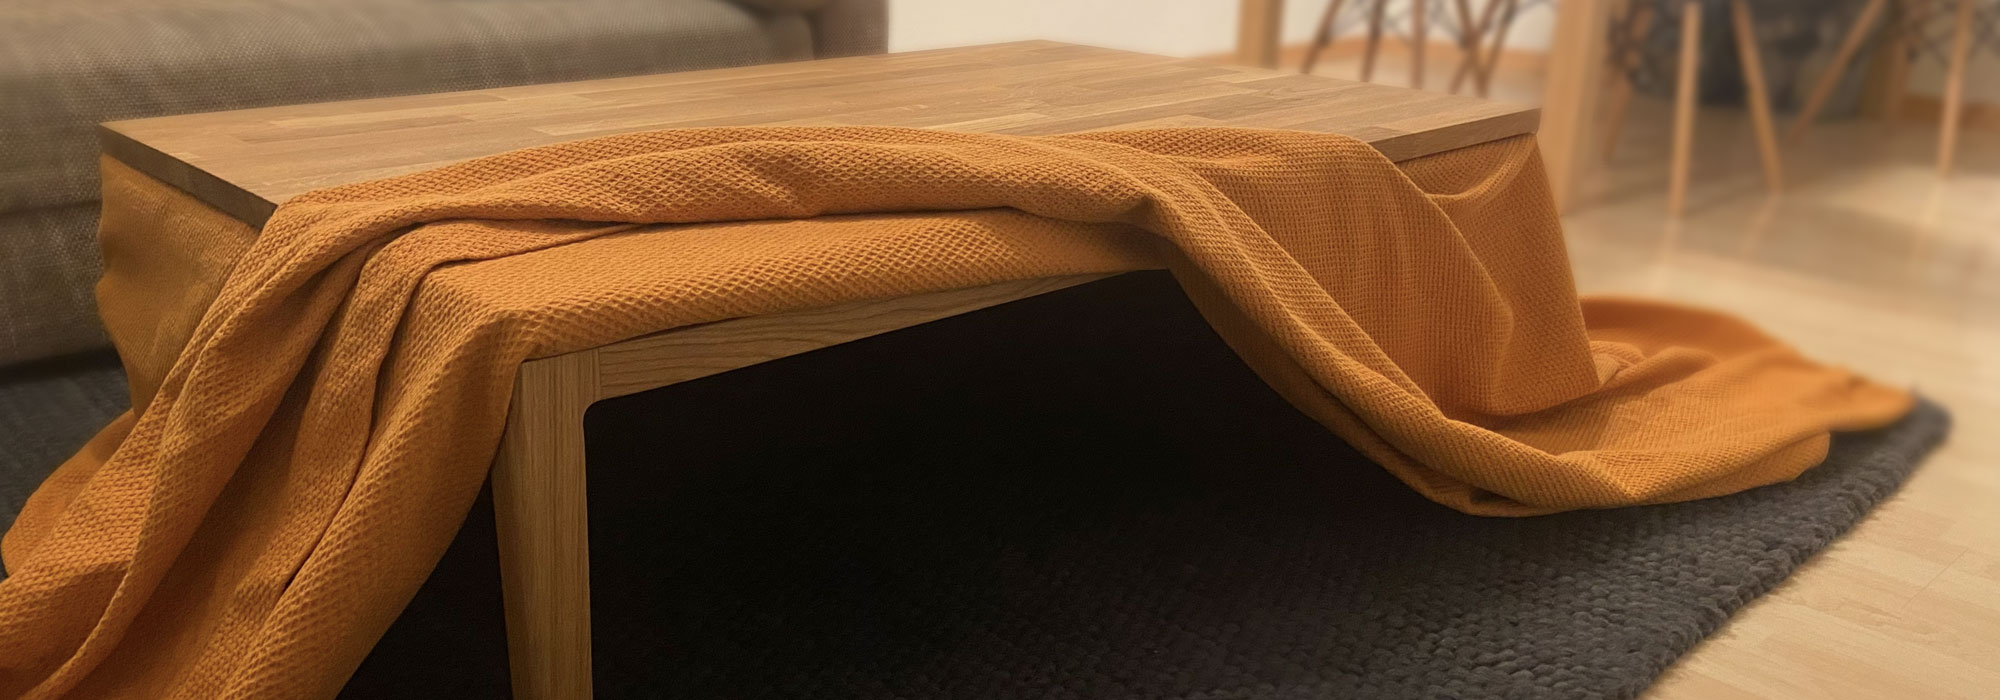 Kotatsu in use